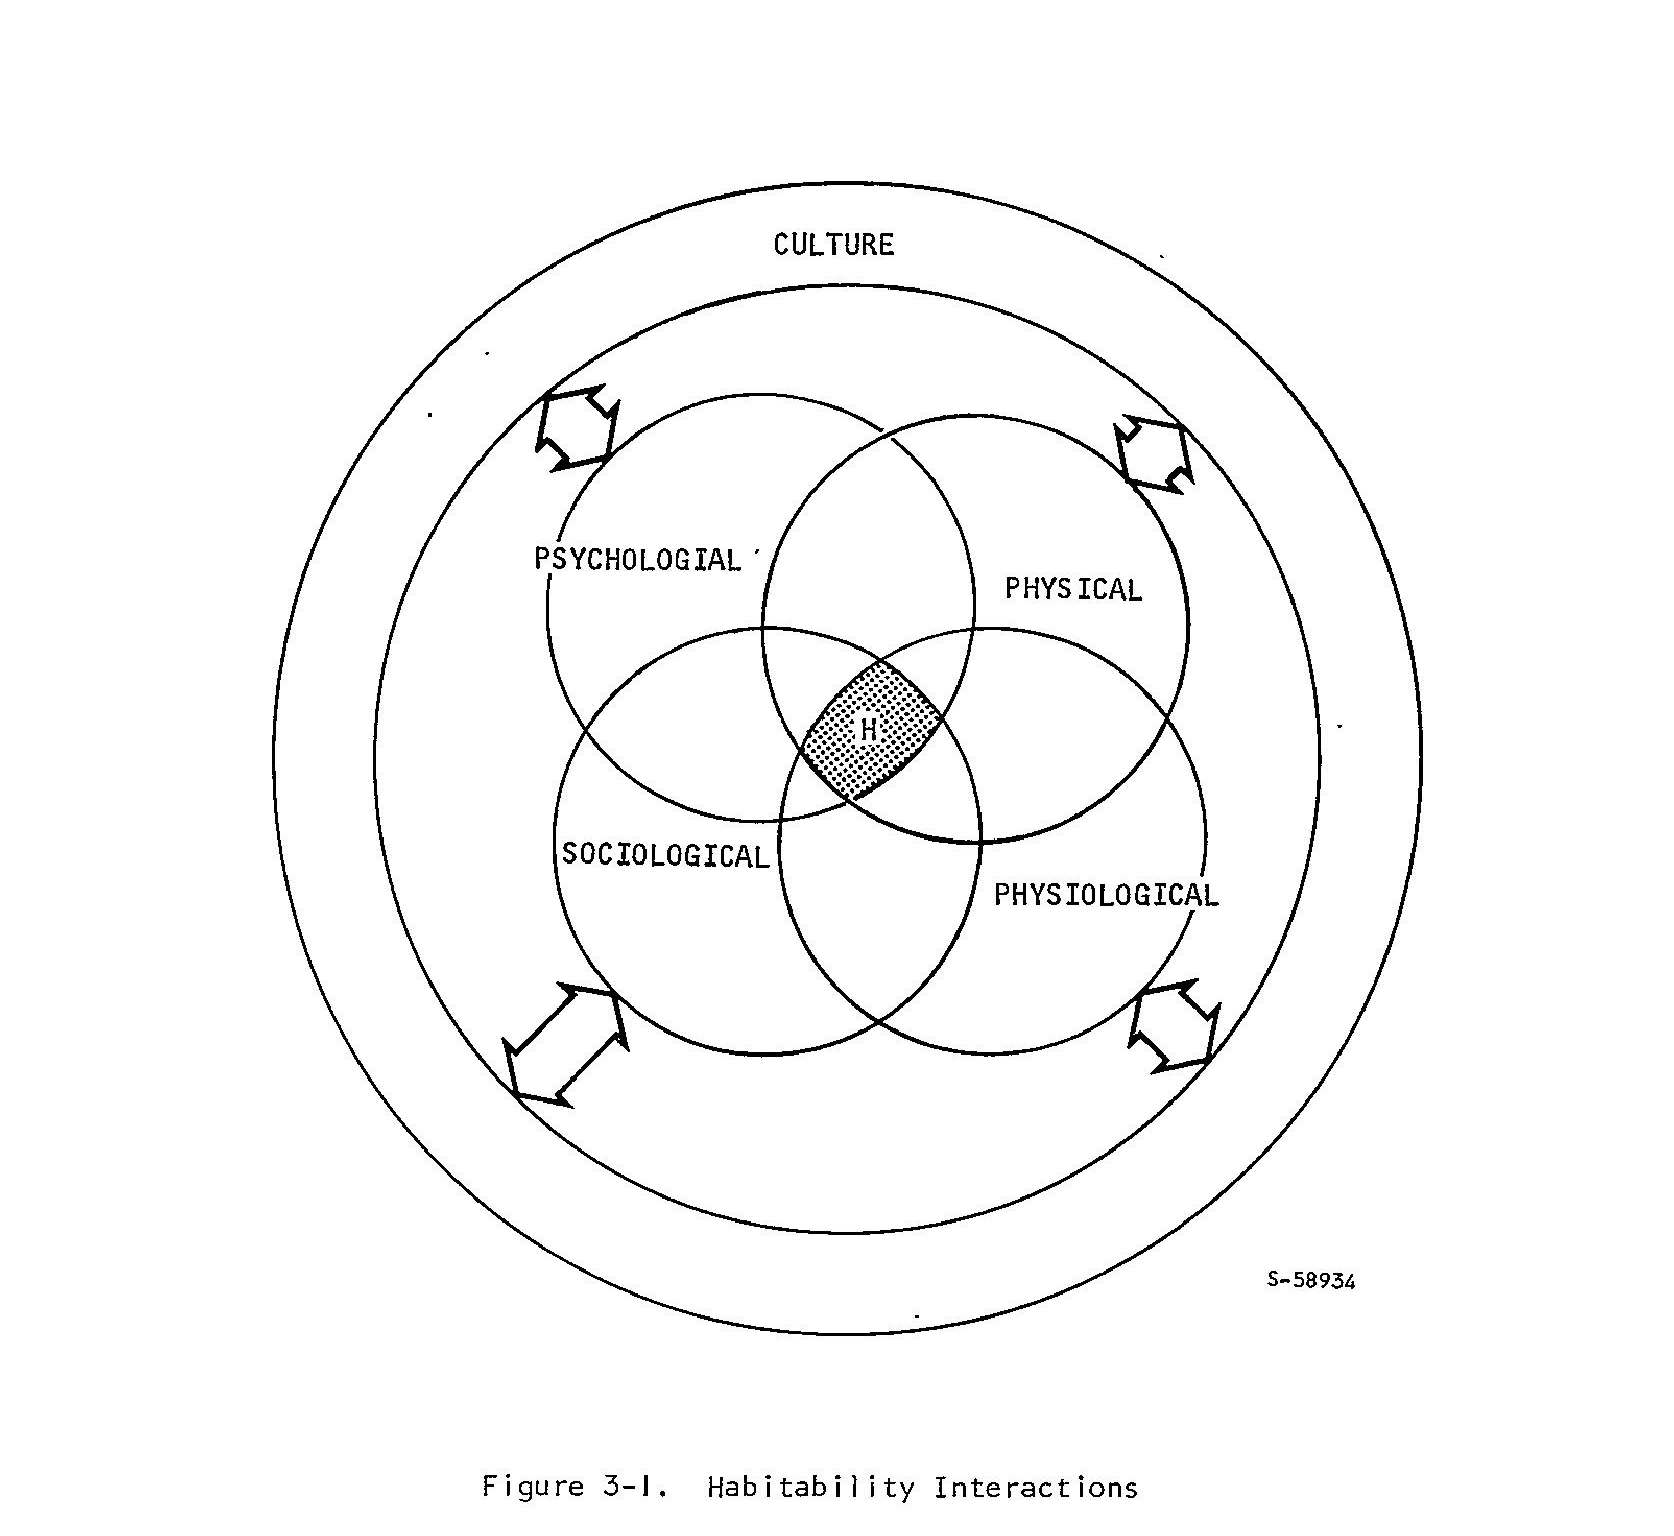 qaudrupal venn diagram of psychological, physical, sociological, and psychological cultures